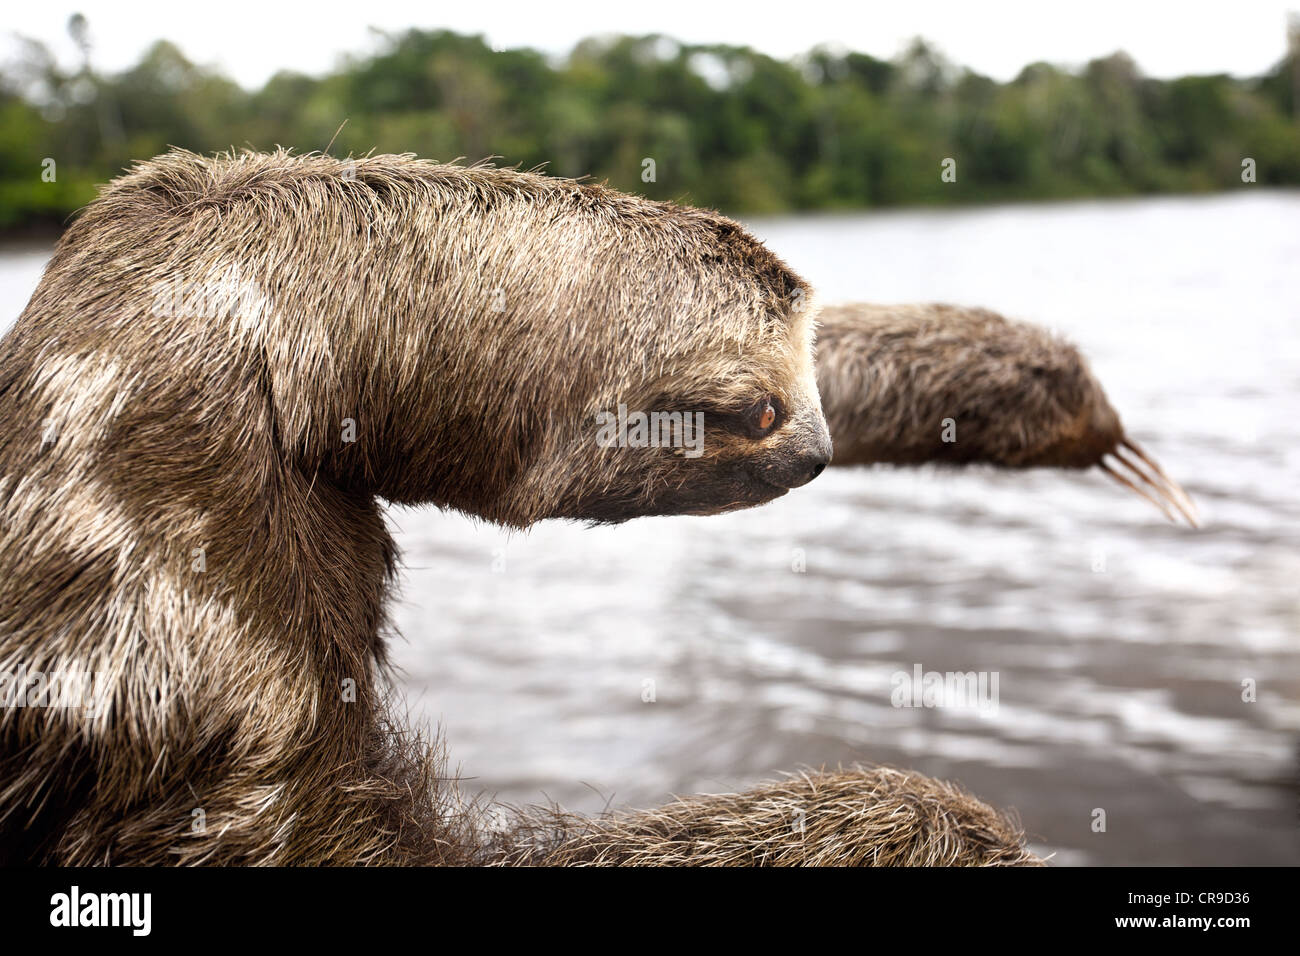 Sloth next to Amazon river in Brazil Stock Photo